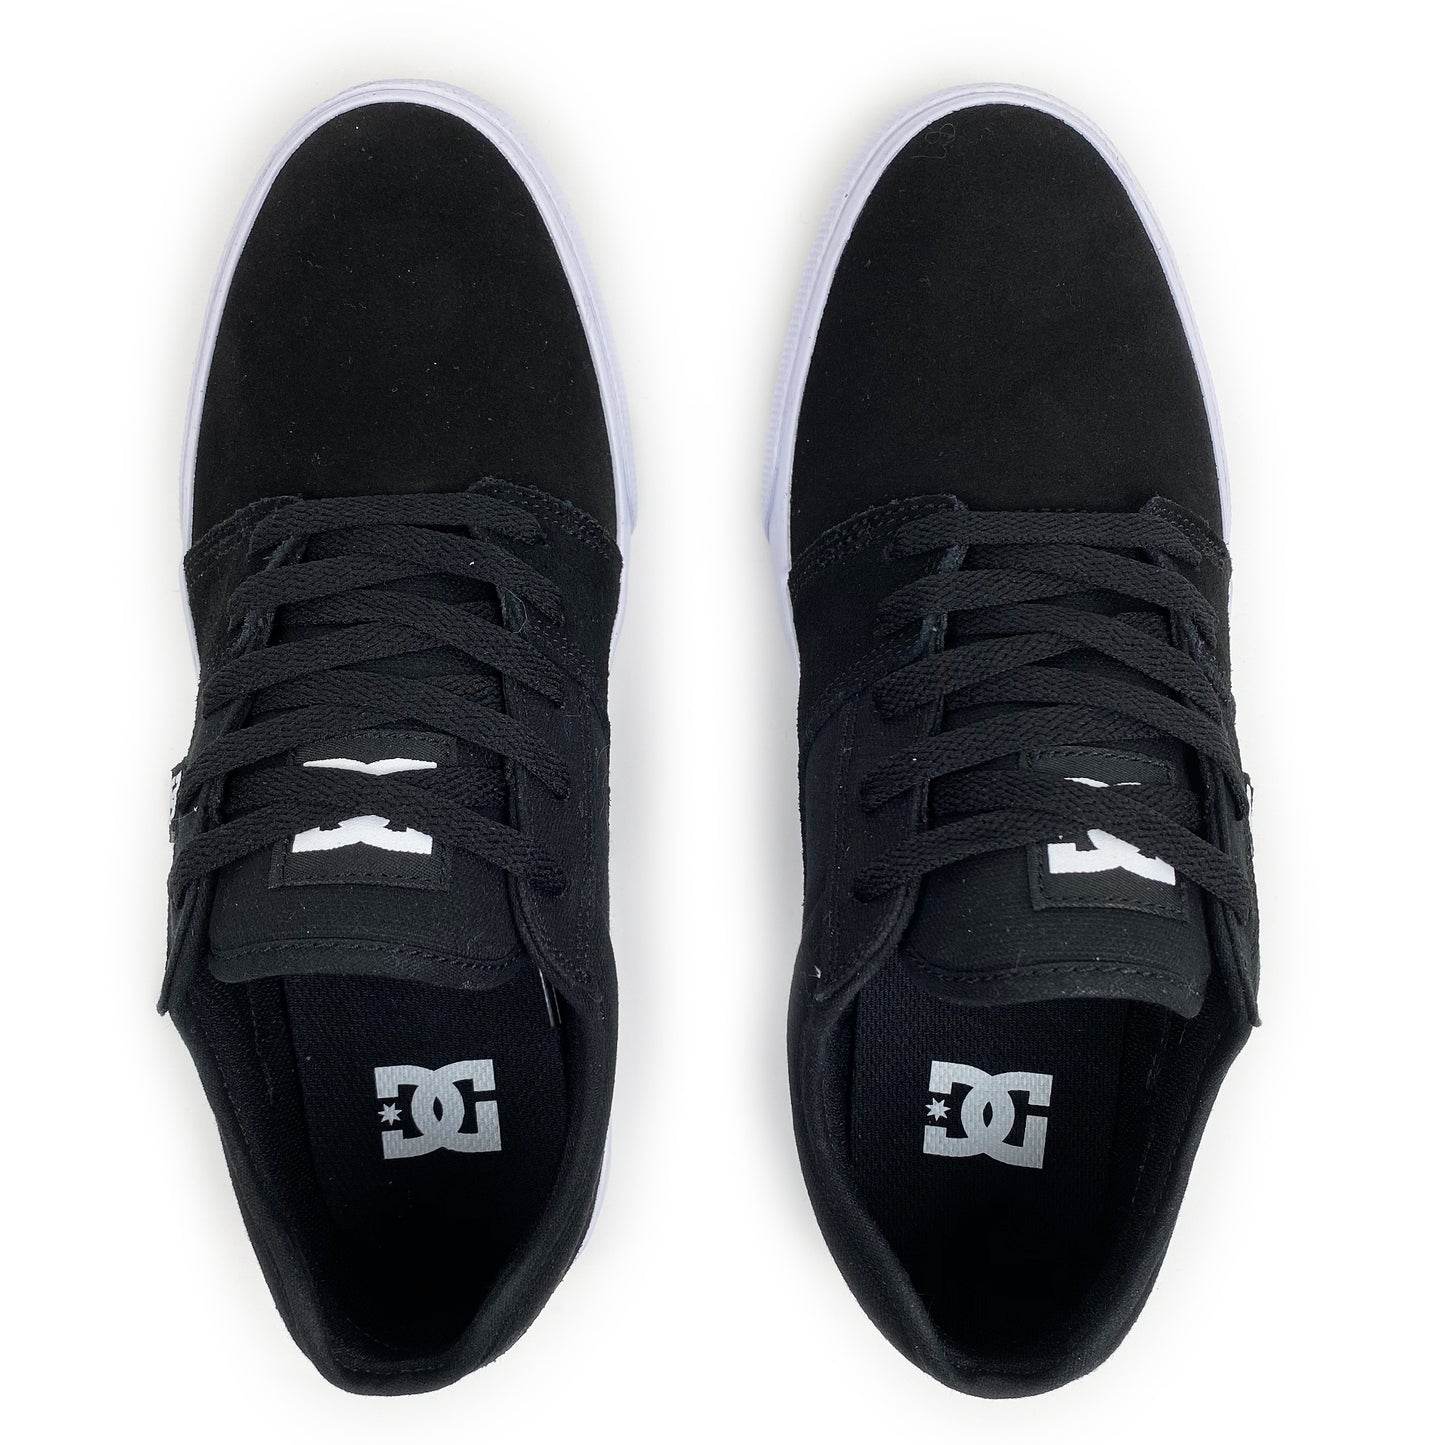 DC Tonik Shoes - Black / White / Black - Prime Delux Store